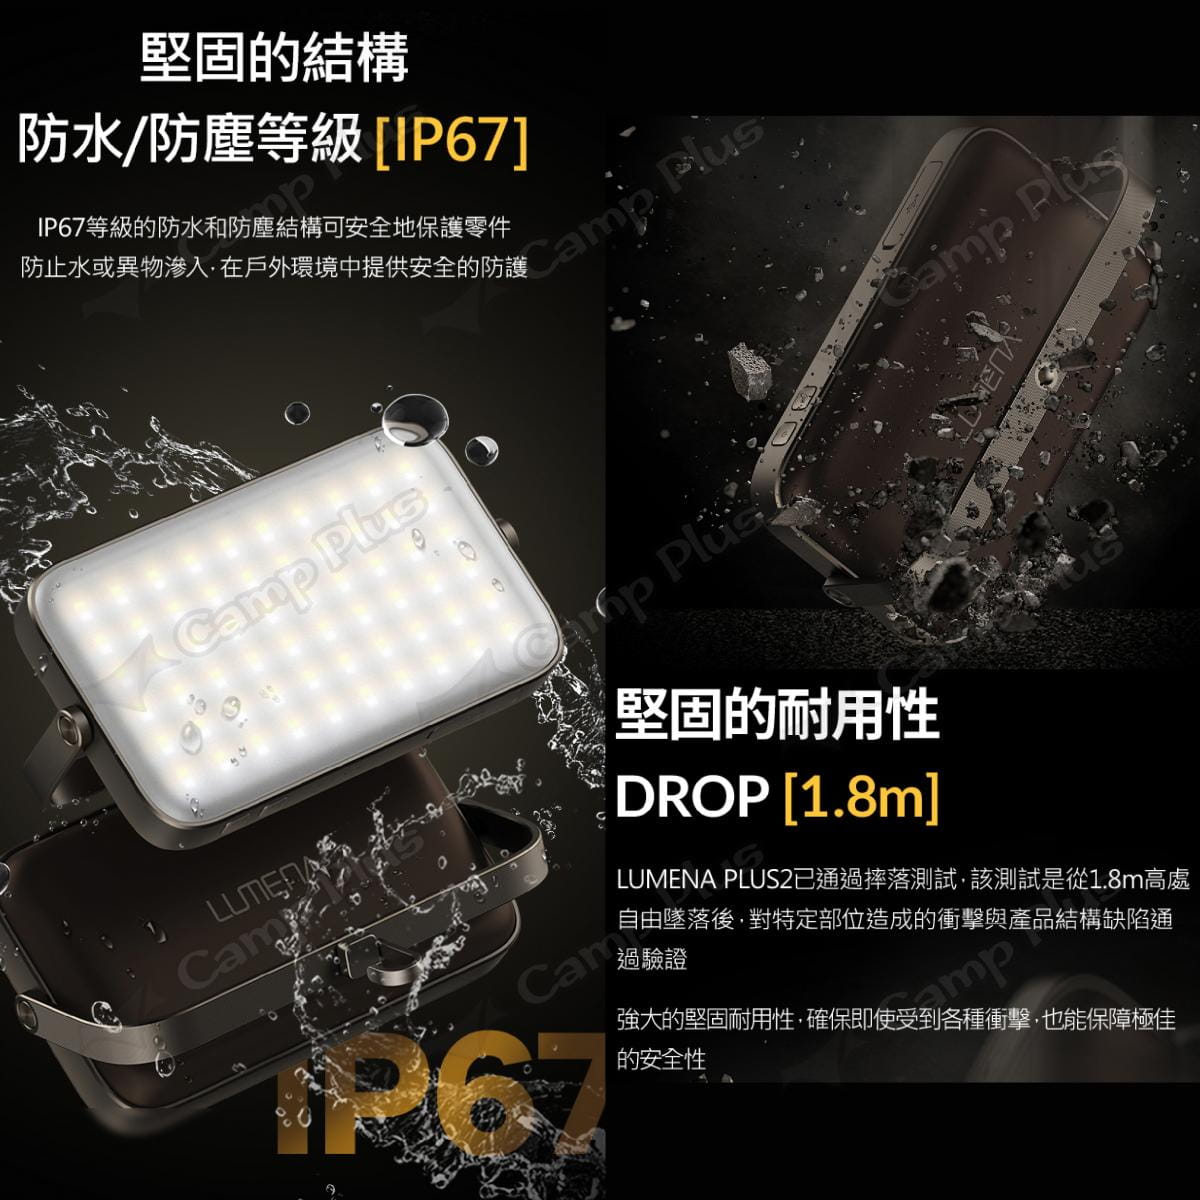 【N9 LUMENA】PLUS2 行動電源照明LED燈 (悠遊戶外) 5